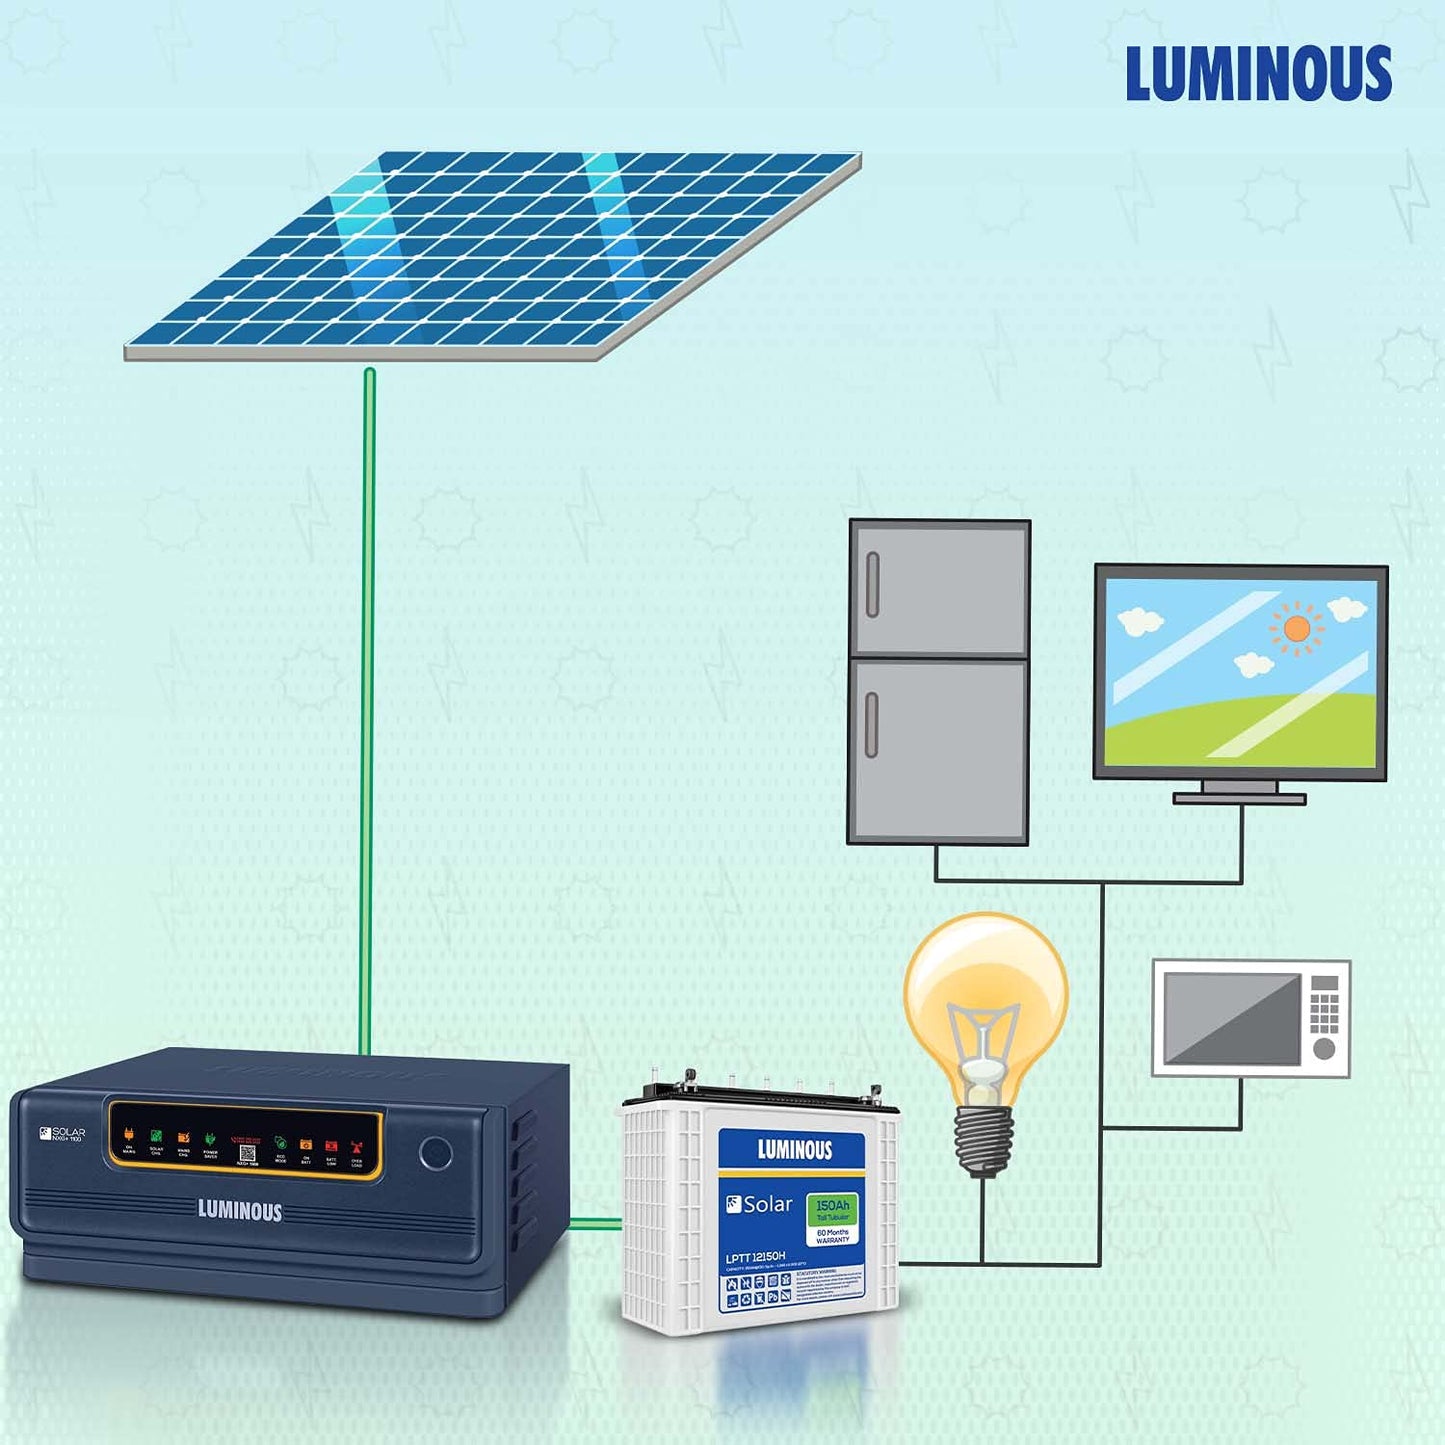 Luminous 1x NXG+ 1100 Hybrid Inverter 1 x LPT12150H 150Ah Solar Battery 1 x 165 Watts Solar Panel